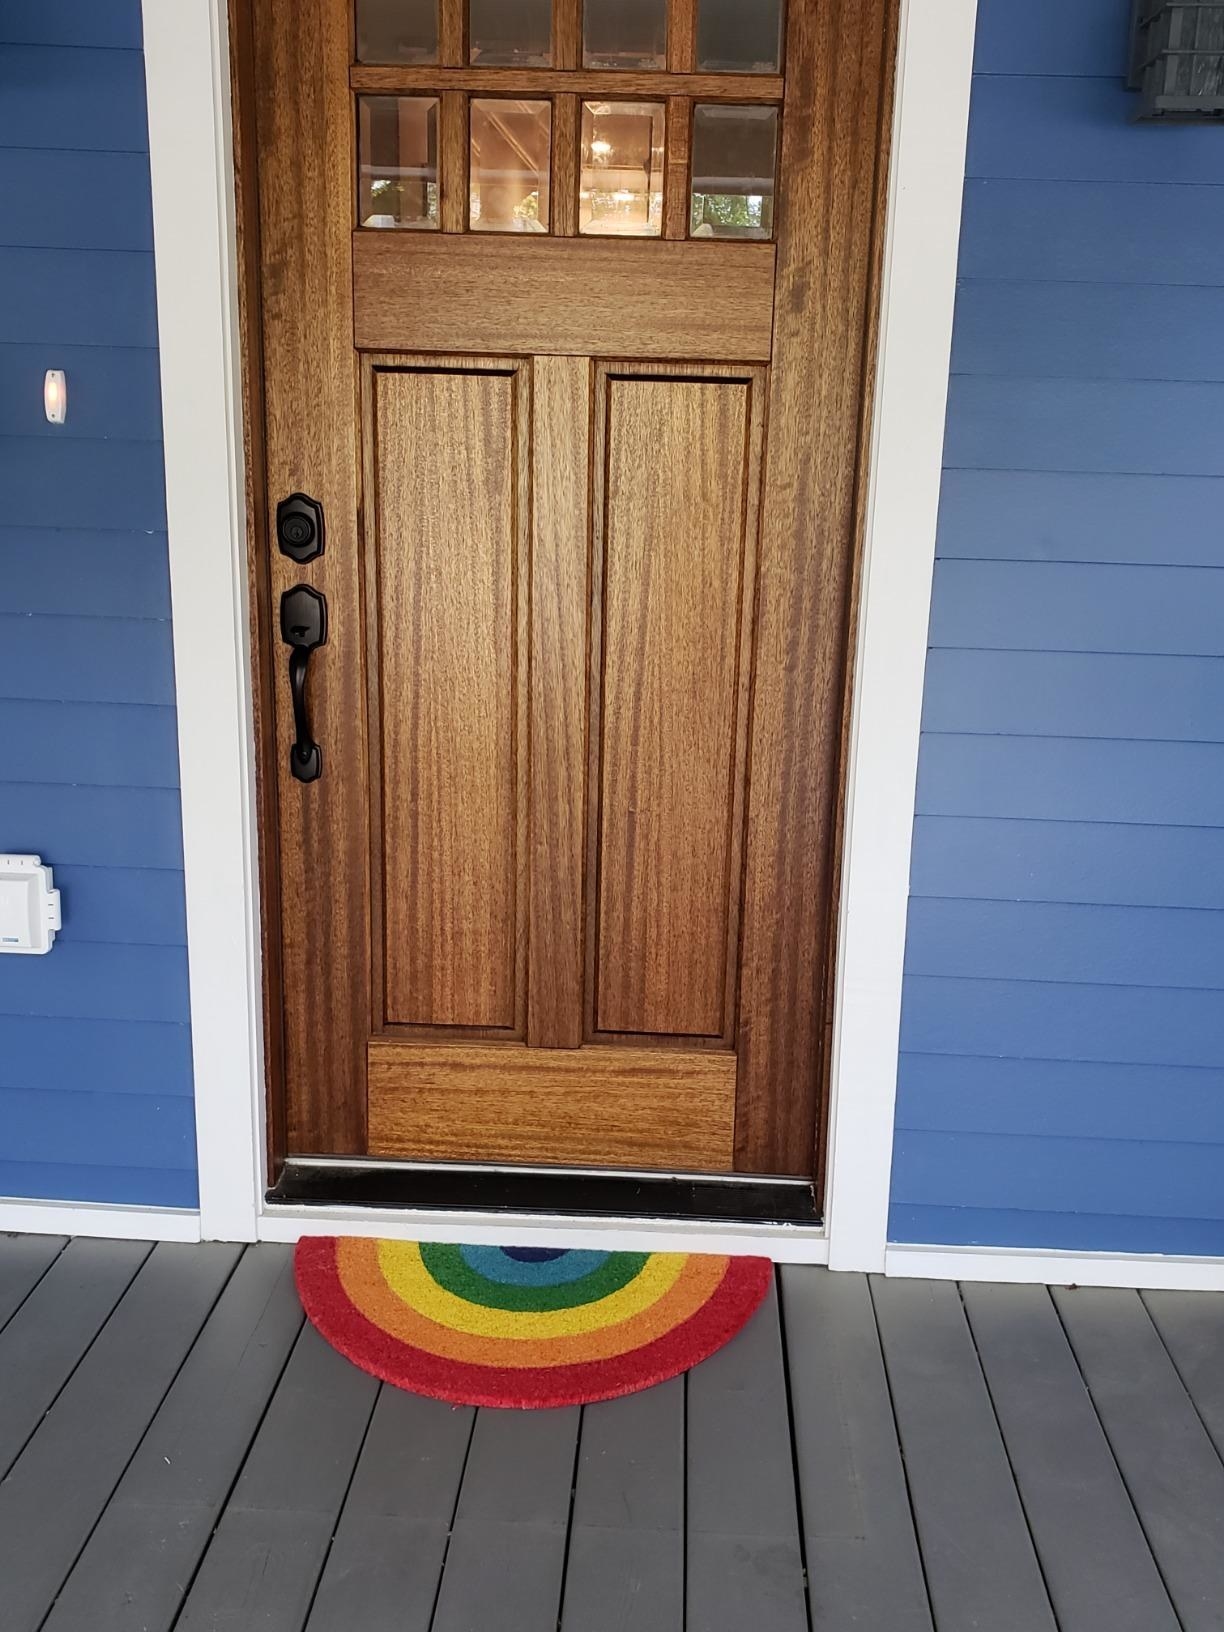 rainbow doormat outside home 